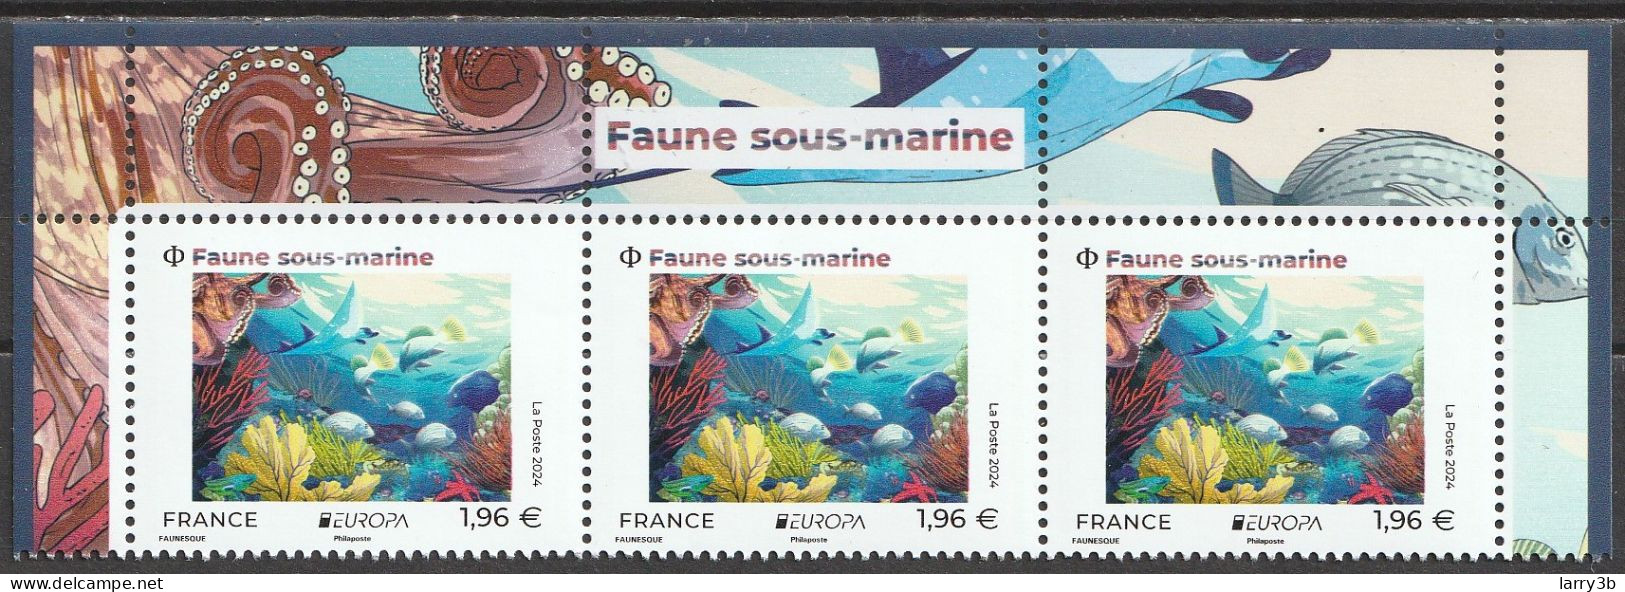 2024 - EUROPA - CEPT FRANCE - "FAUNE SOUS-MARINE" - BLOC 3 ISSU HAUT FEUILLET 1,96 € - NEUF ** - MNH - 2024